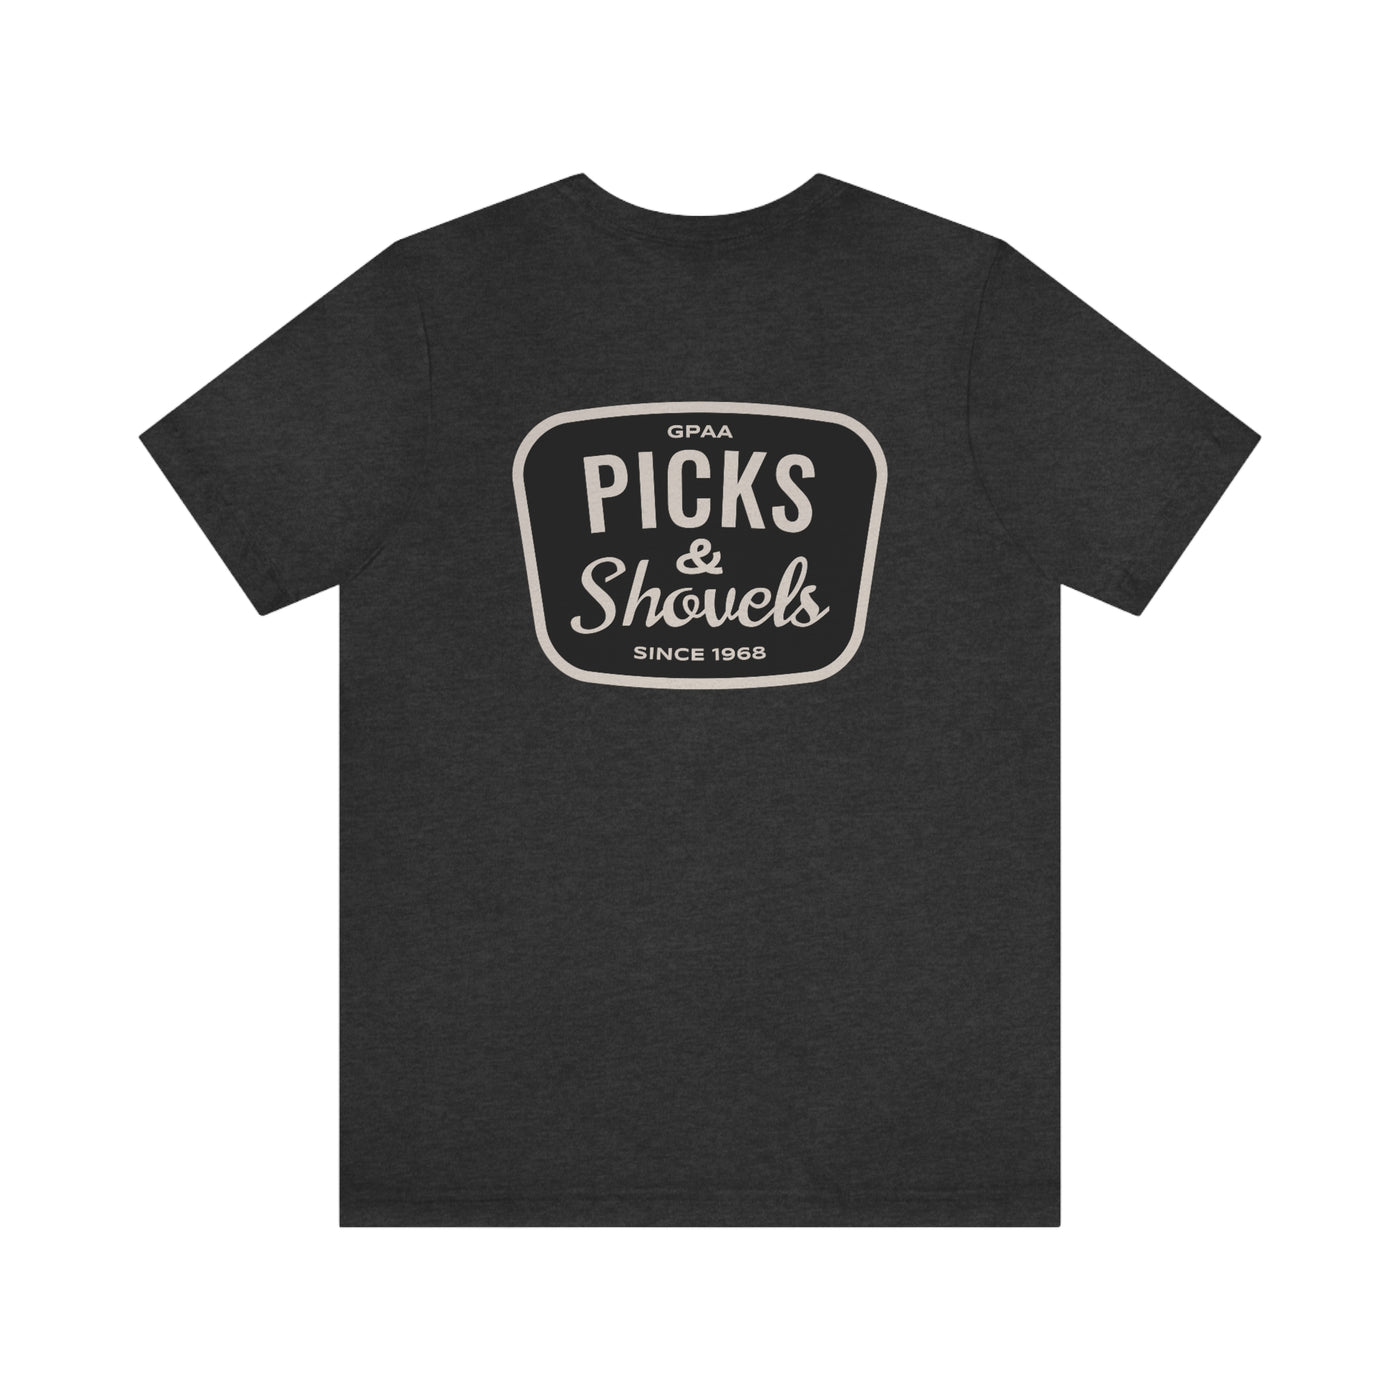 Picks & Shovels - GPAAv1 T-Shirt